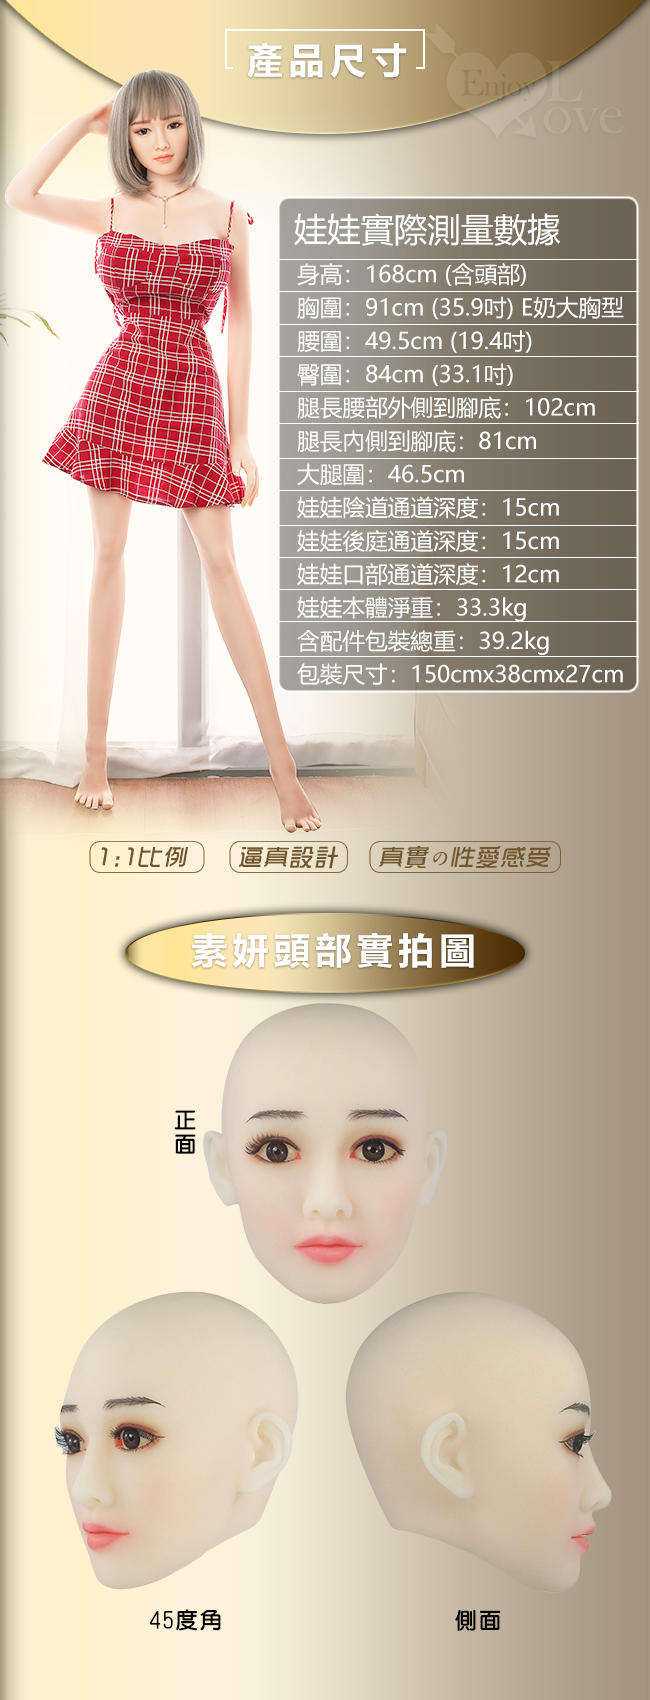 《 So Yeon 素妍 ‧ 絕對服從賢淑巨乳少妻 》全實體矽膠+骨骼系統真人玩伴 ﹝168cm / 33kg﹞